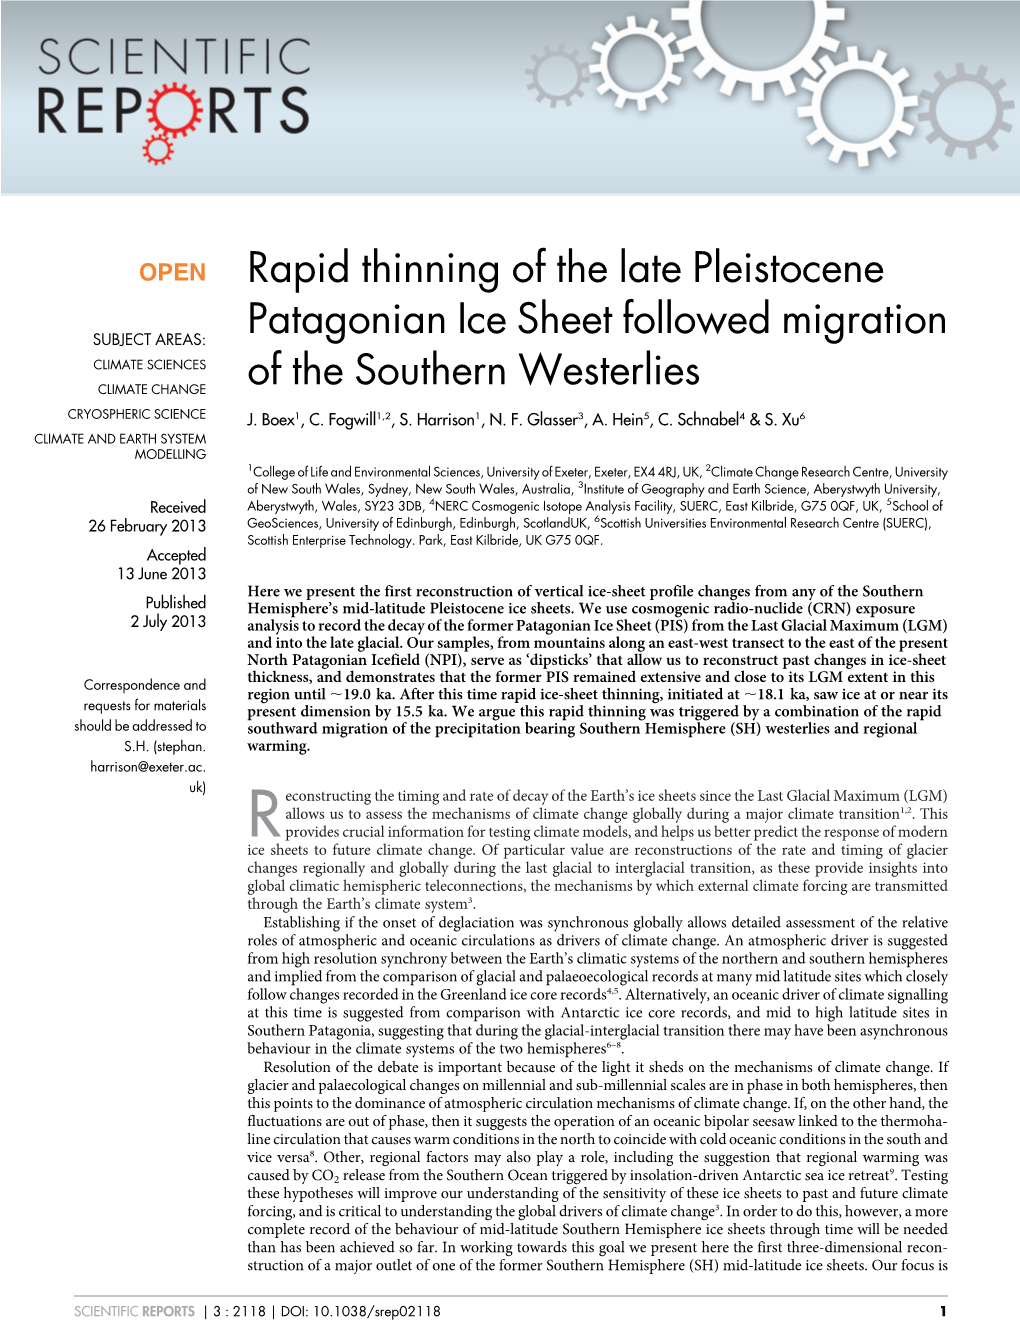 Rapid Thinning of the Late Pleistocene Patagonian Ice Sheet Followed